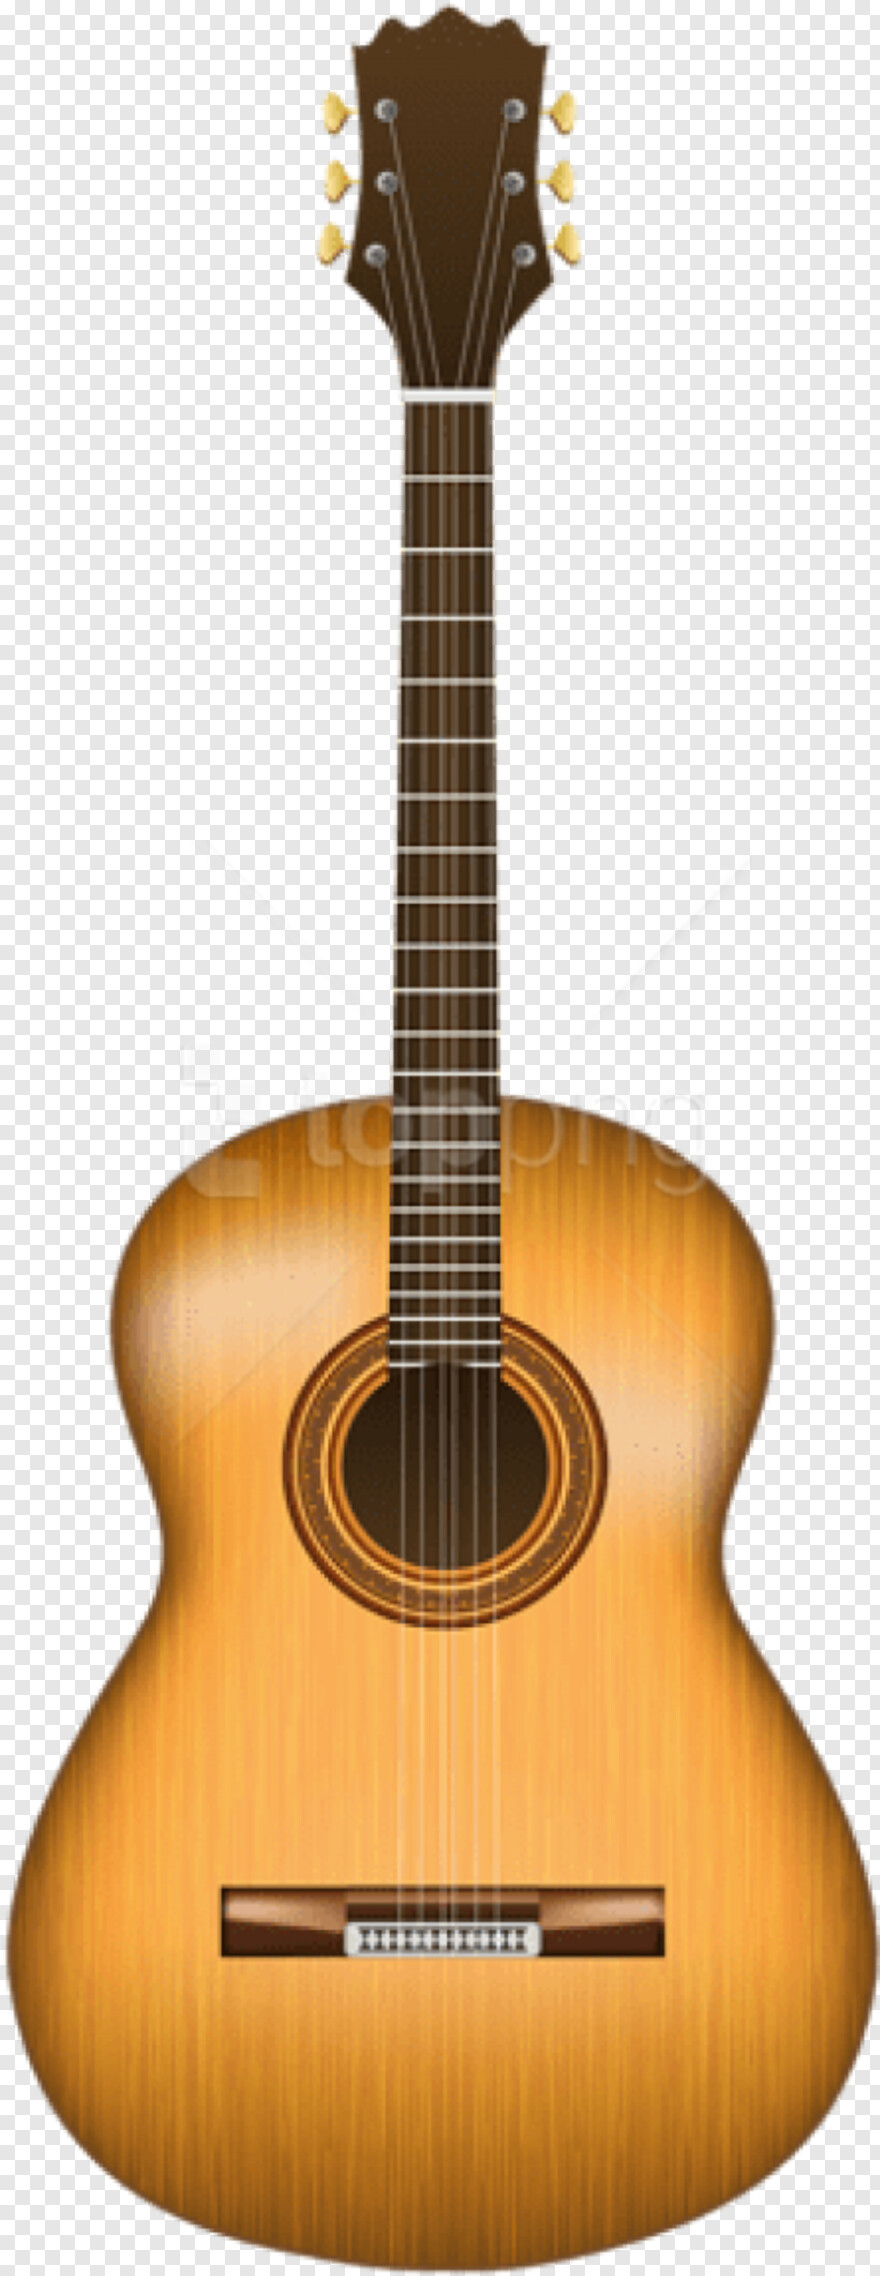 acoustic-guitar # 575580